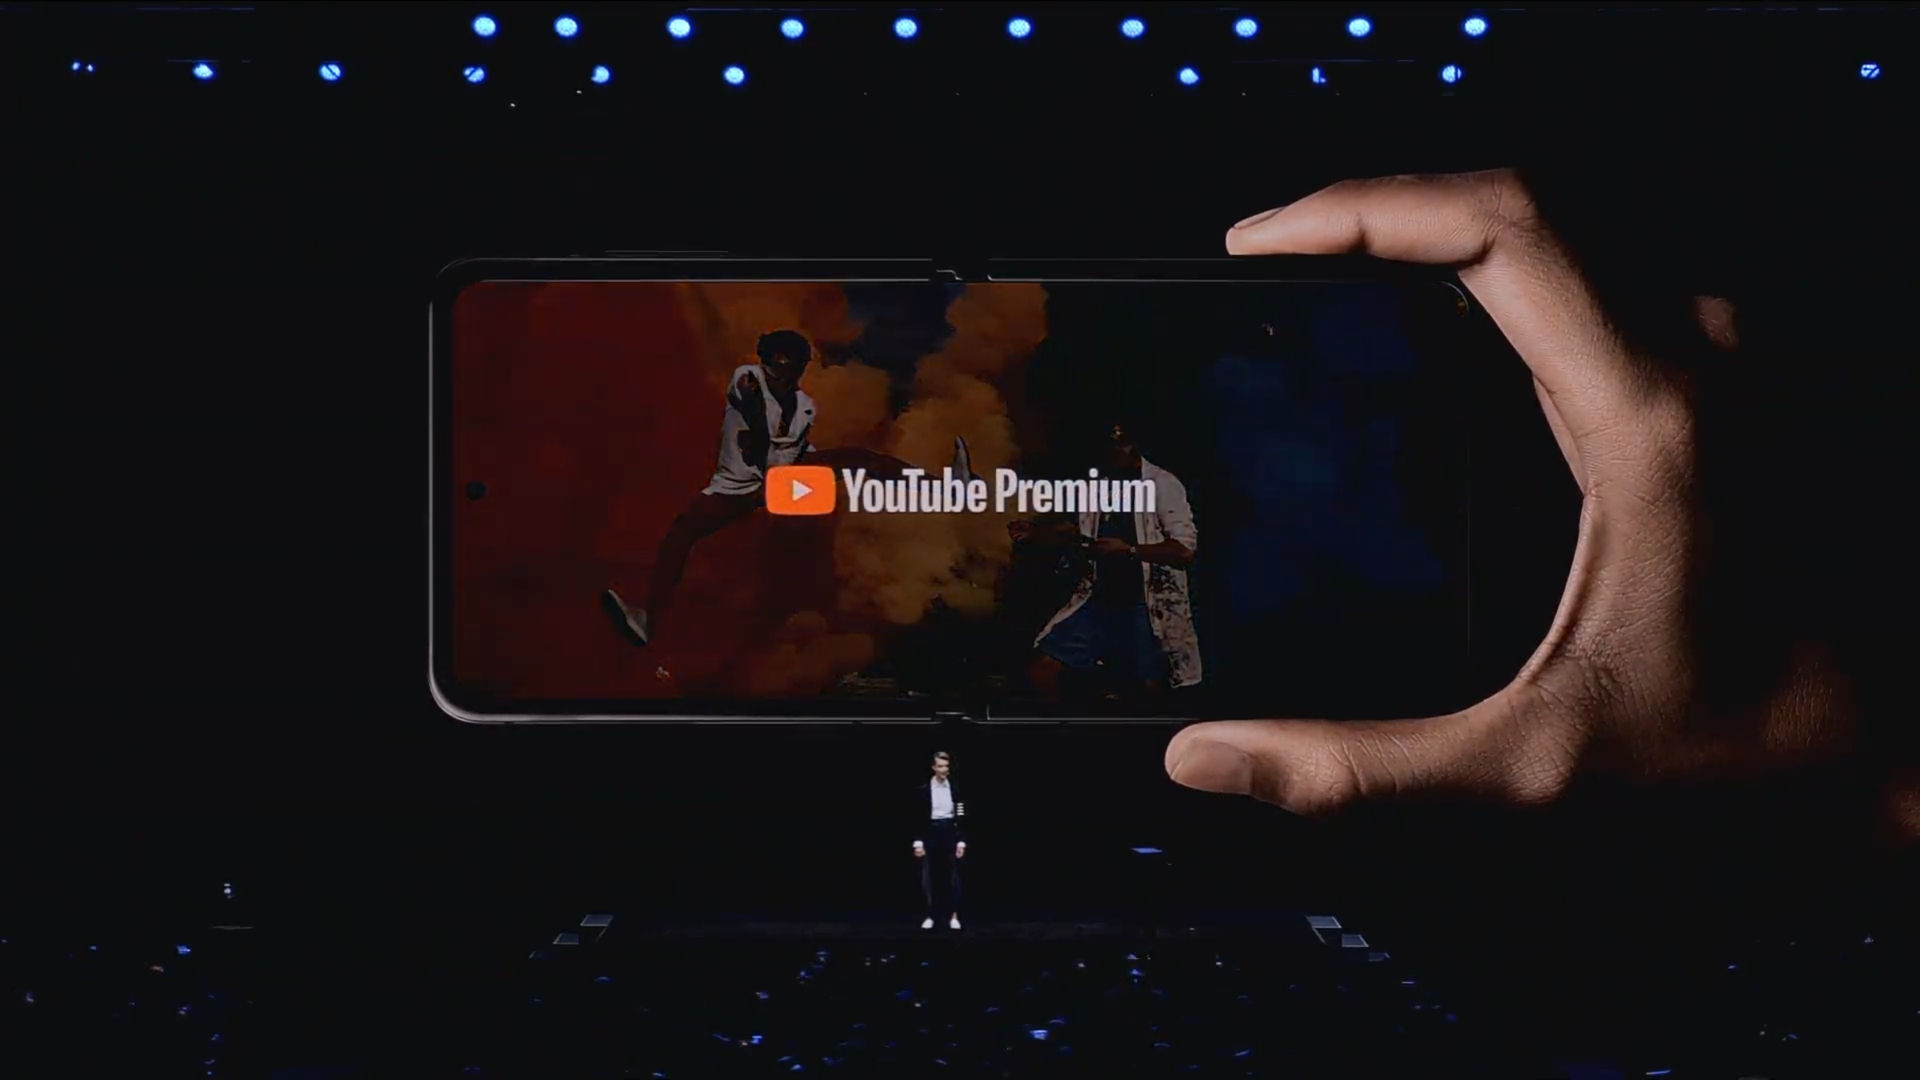 Z Flip YouTube Premium Samsung Unpacked 2020